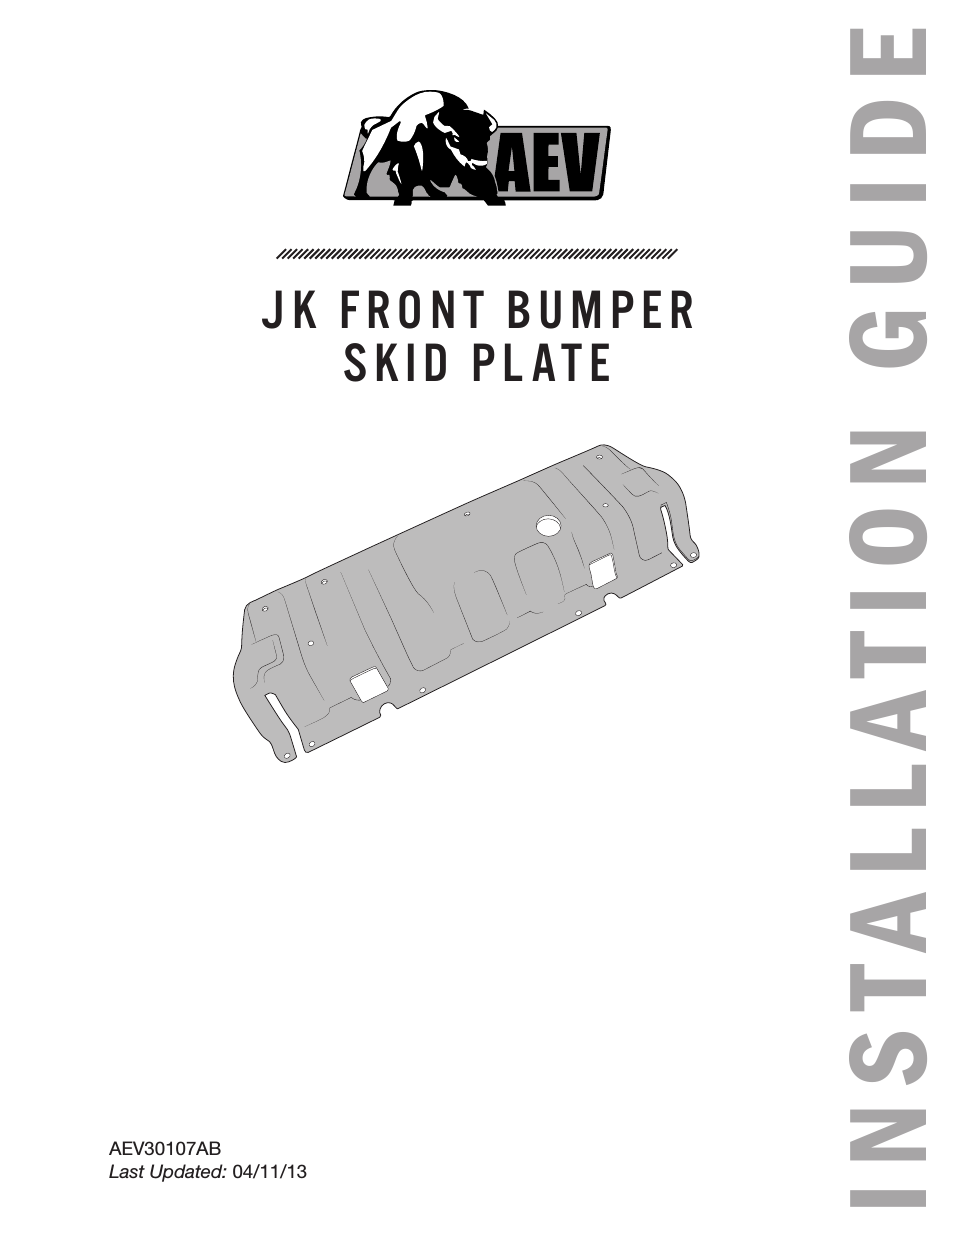 JK Front Bumper Skid Plate